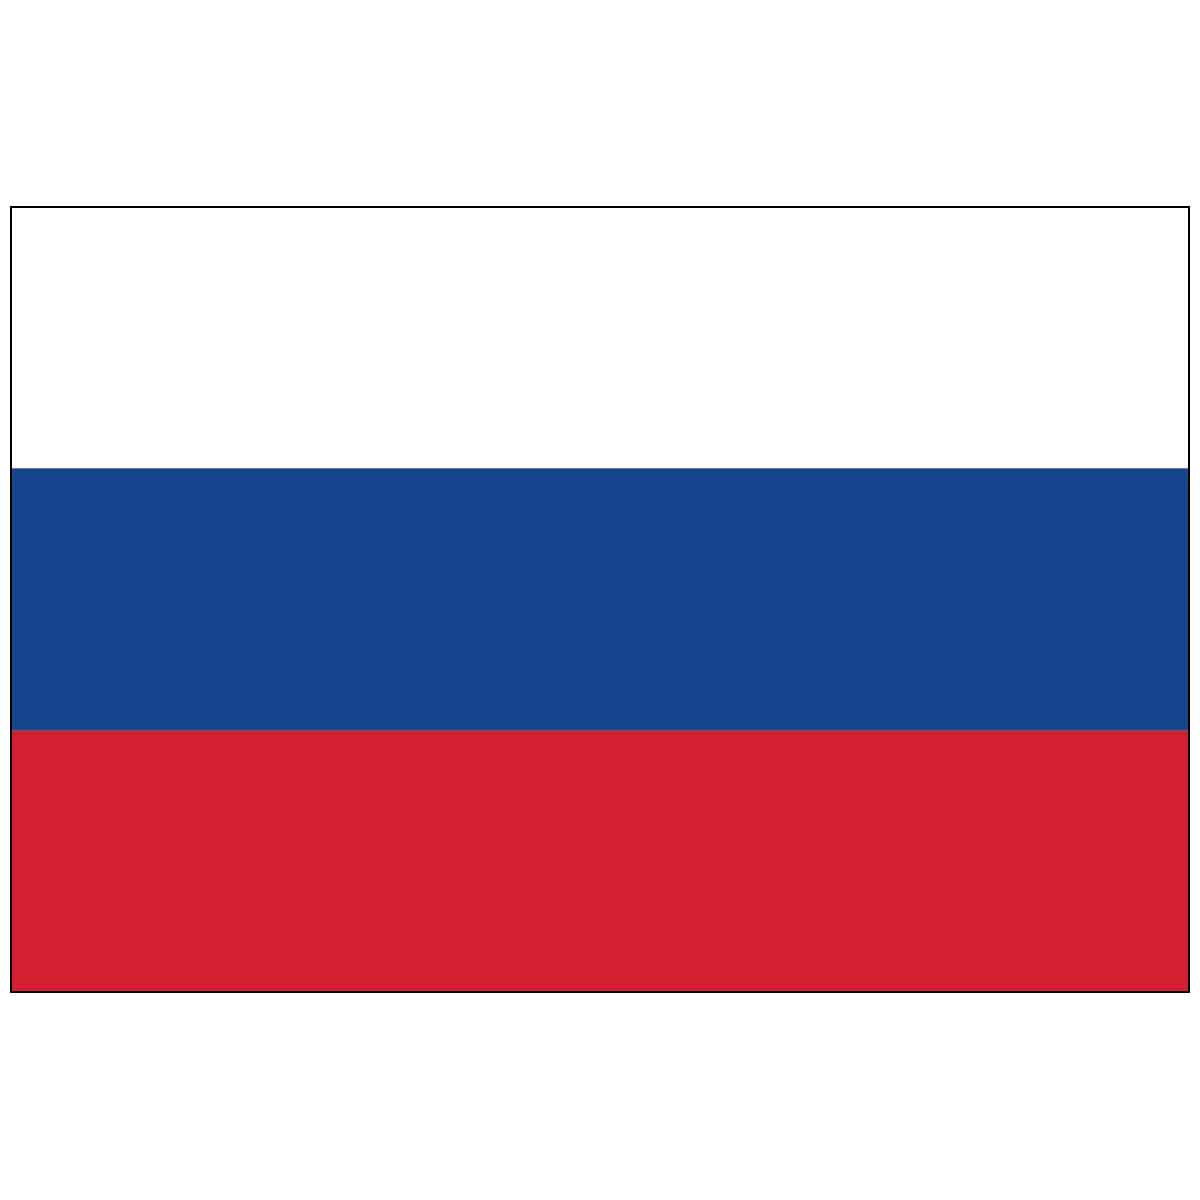 Russia Russian Flag 5' x 3